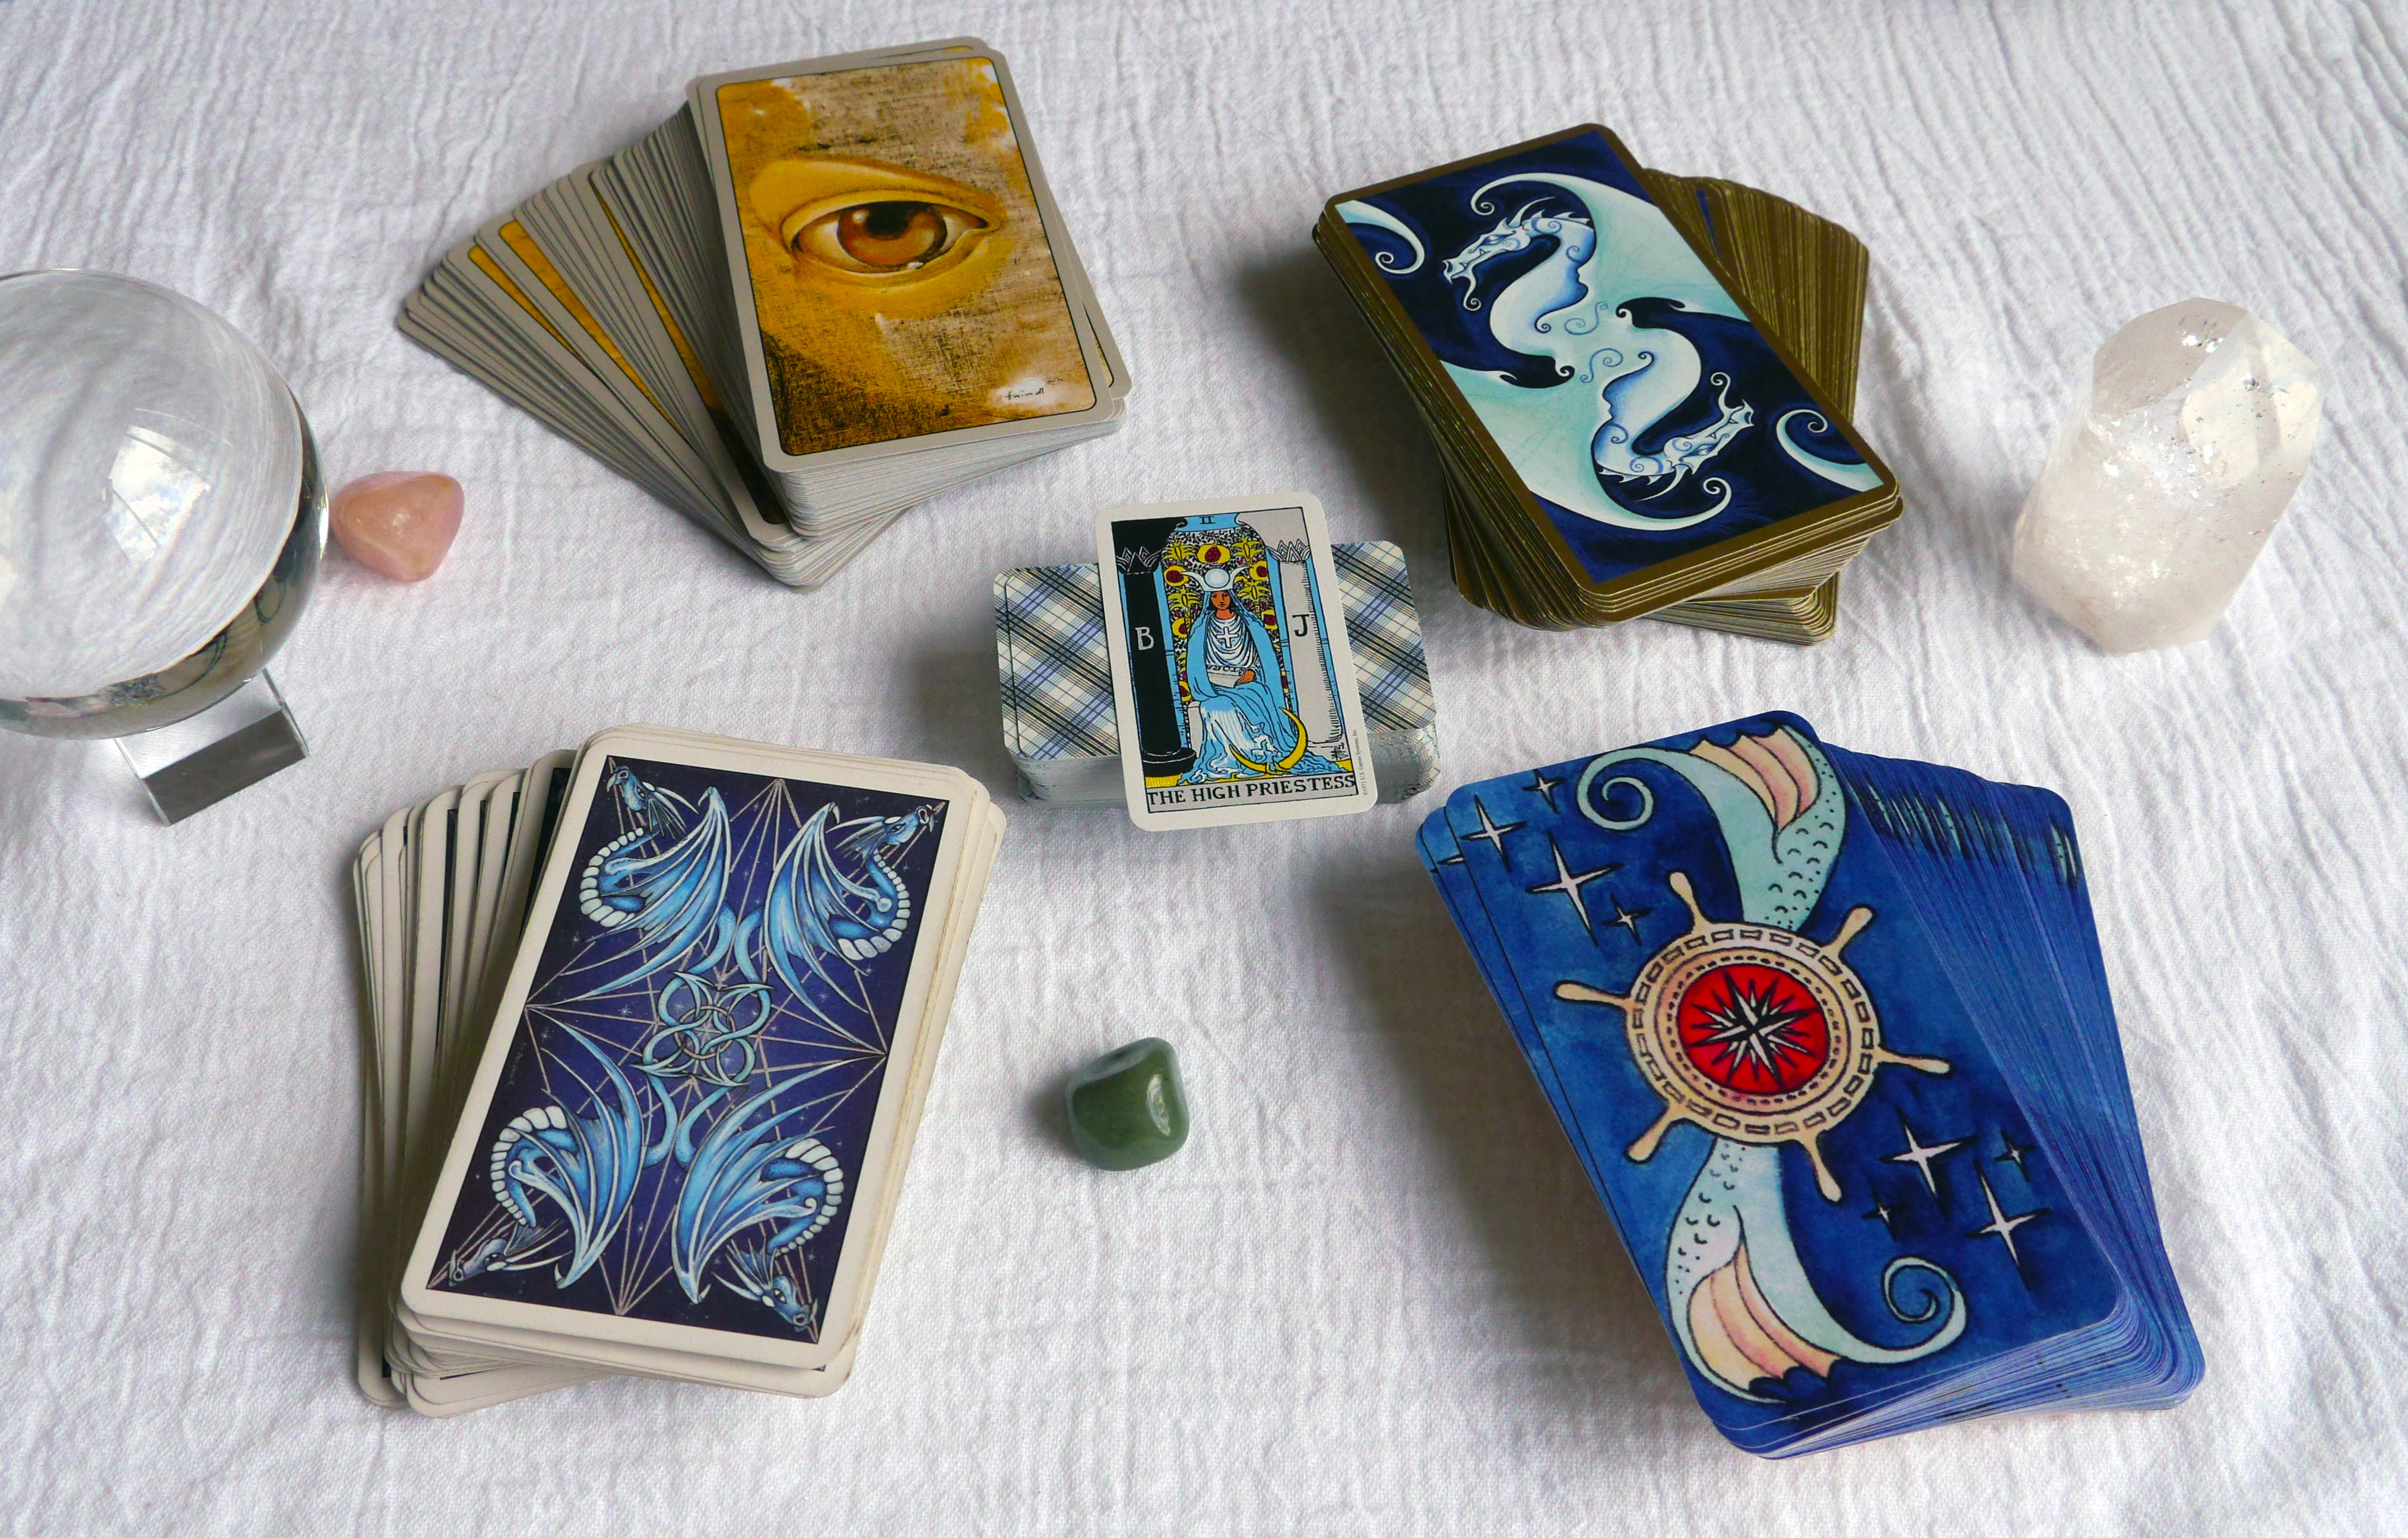 In the center: mini Rider-Waite-Smith, top left: Haindl Tarot, top right: Fantastical Tarot, bottom left: Dragon Tarot, bottom right: Dame Darcy's Mermaid Tarot